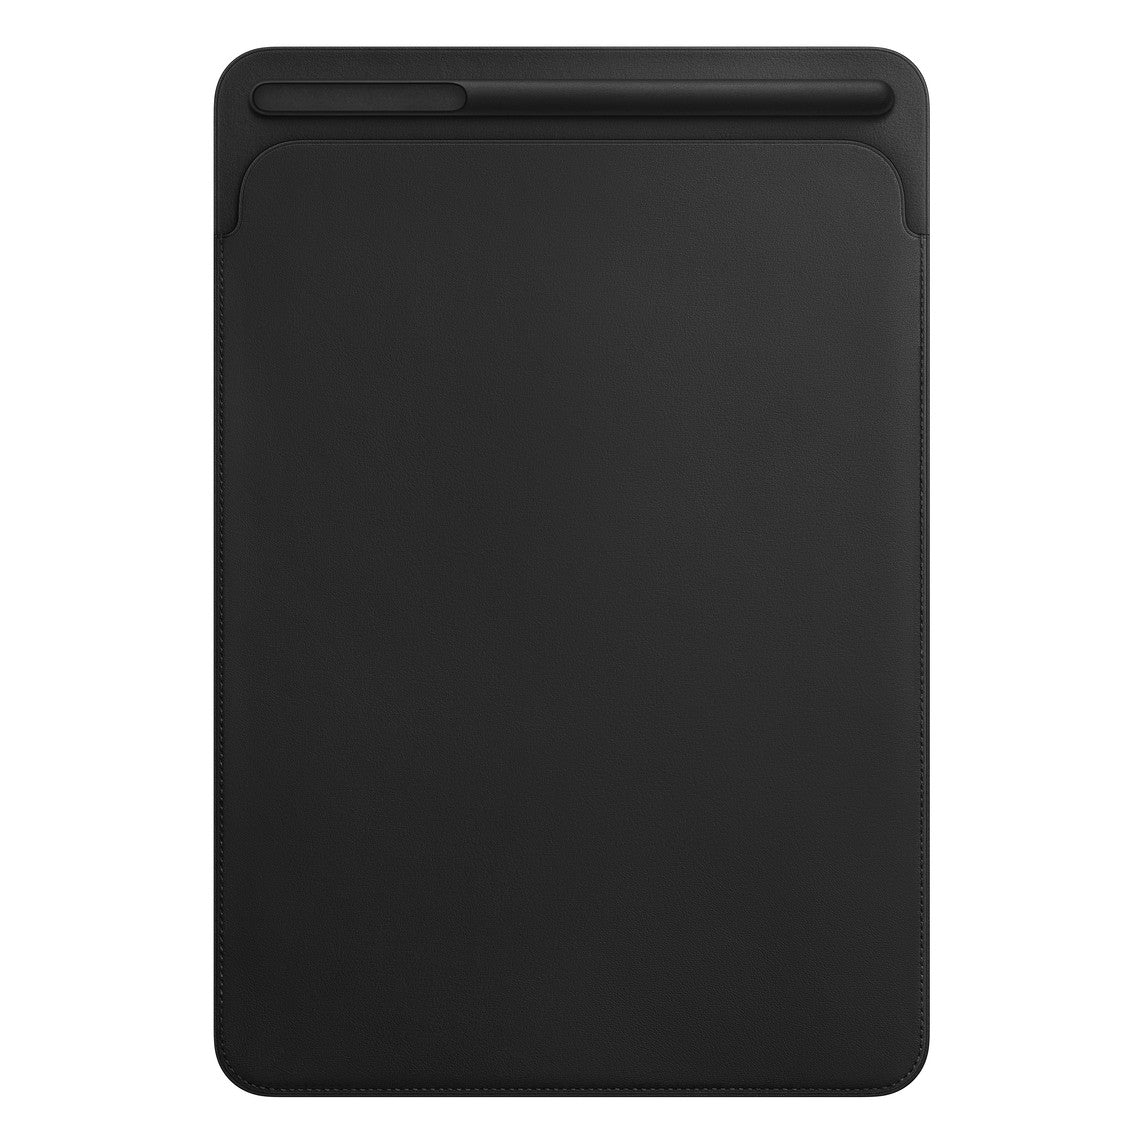 Leather Sleeve for iPad - Black